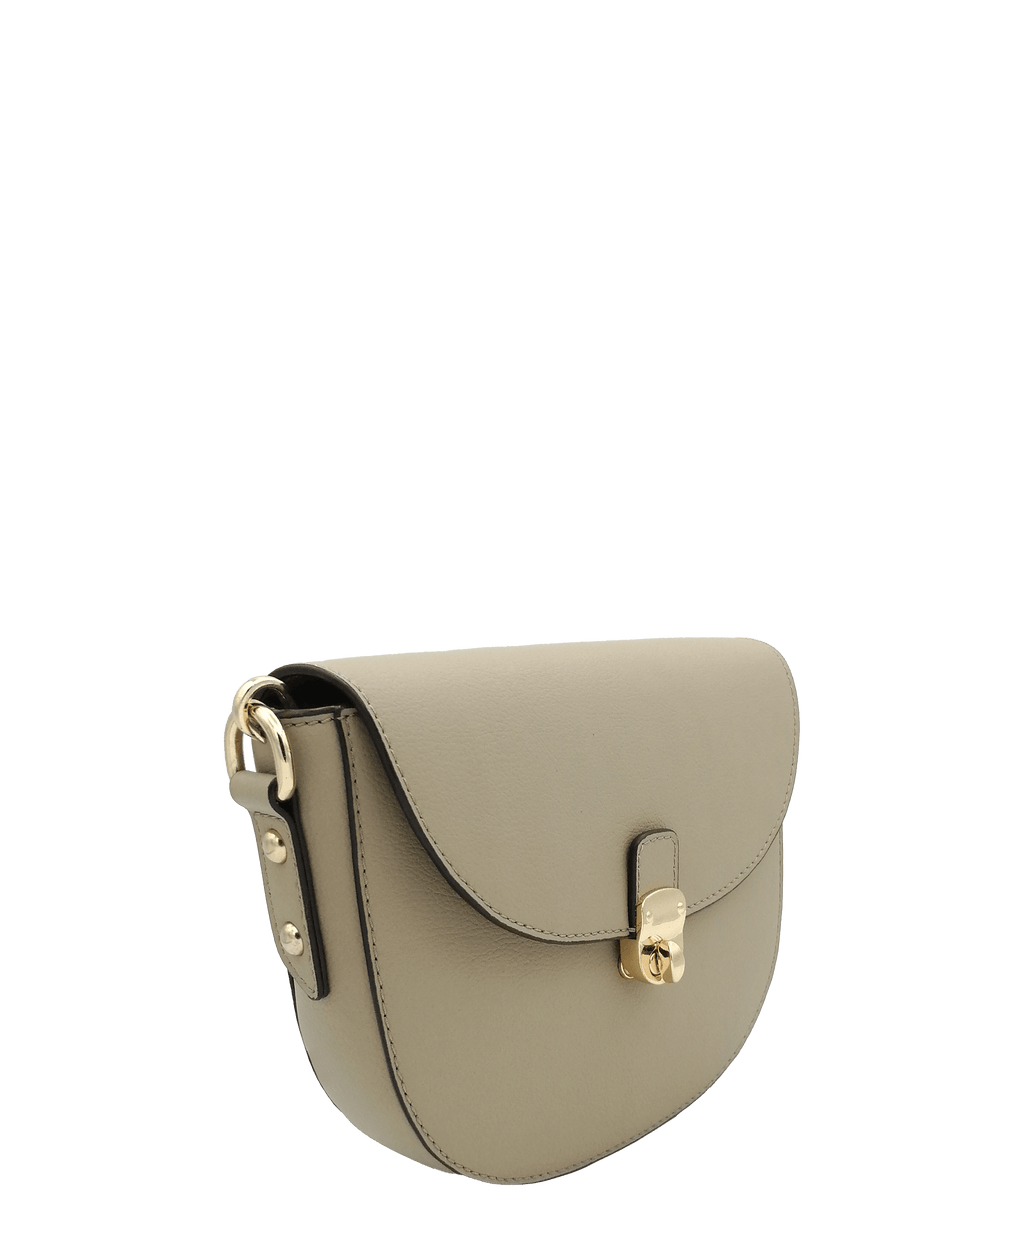  Small Crossbody Bag for Women, Vegan Leather Handbag